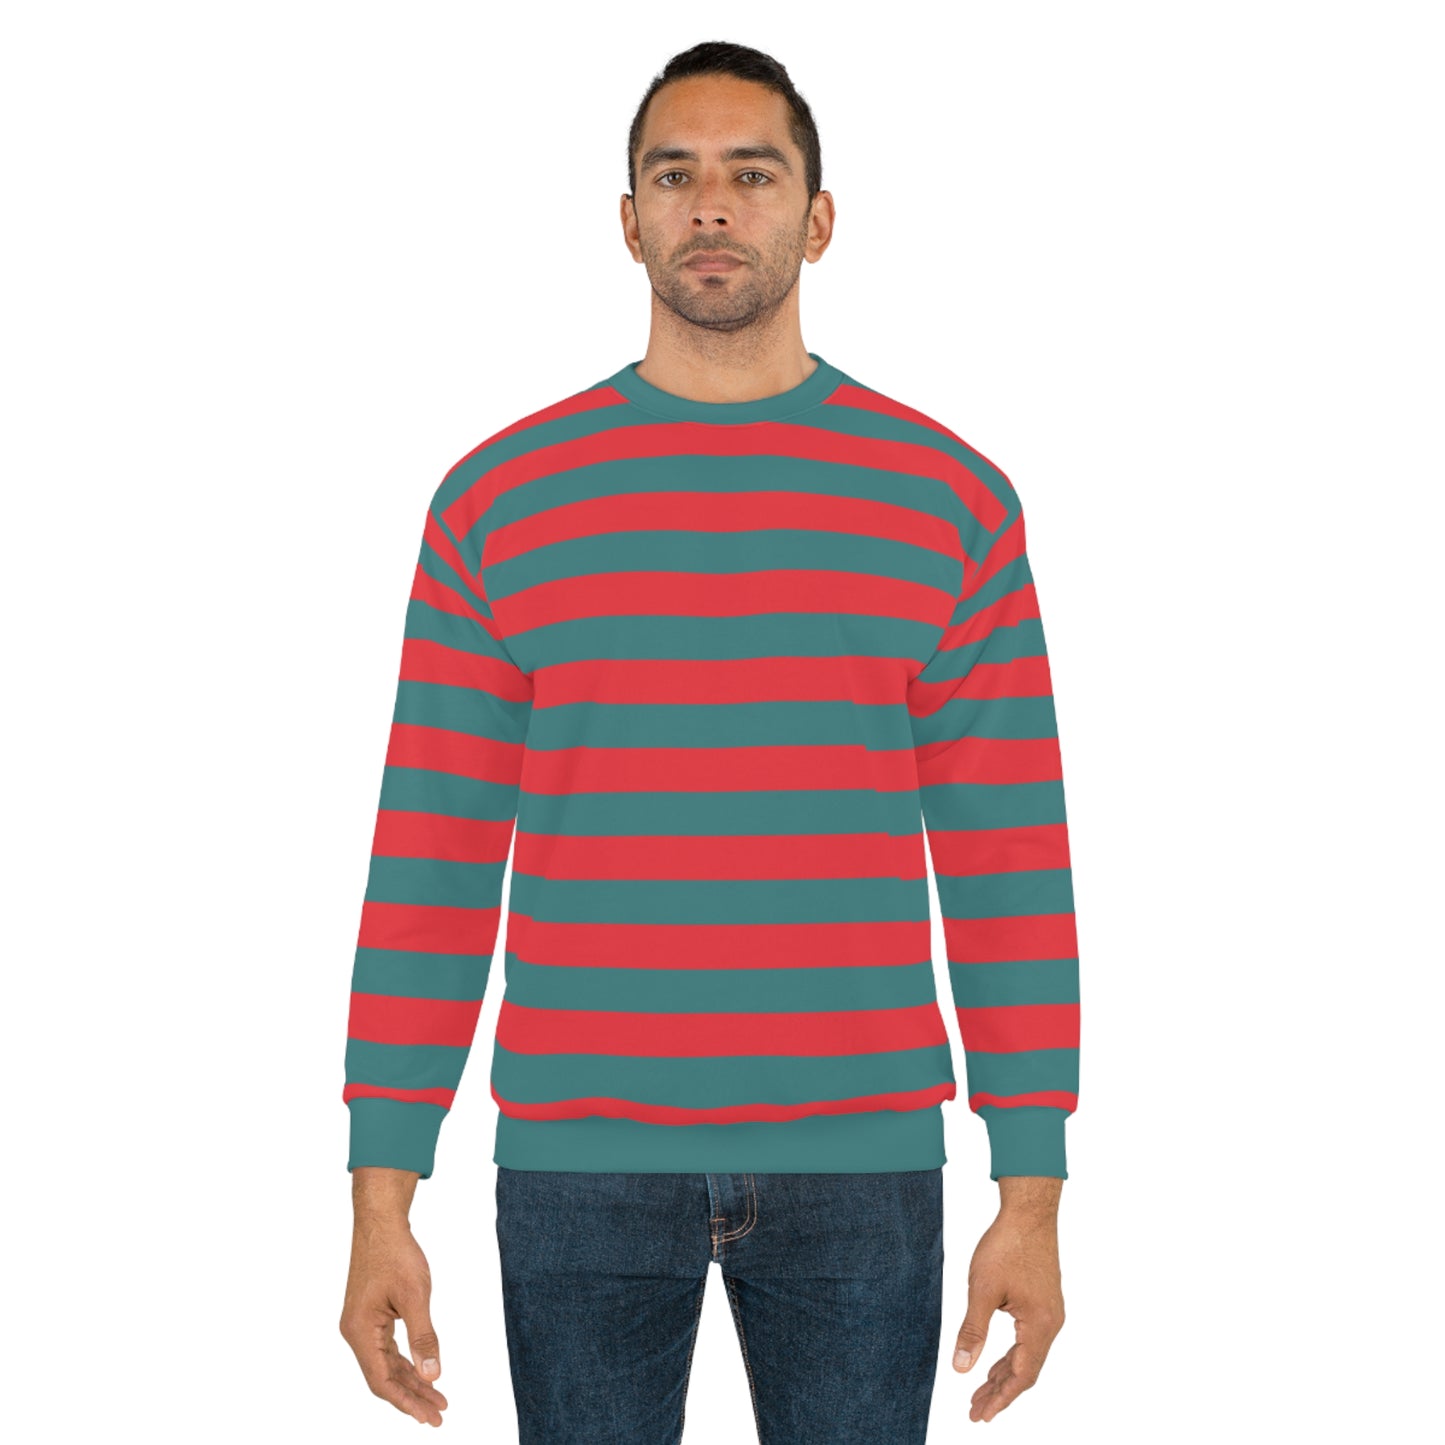 Green and Red Striped Sweatshirt, Graphic Crewneck Fleece Cotton Sweater Jumper Pullover Men Women Adult Aesthetic Designer Top